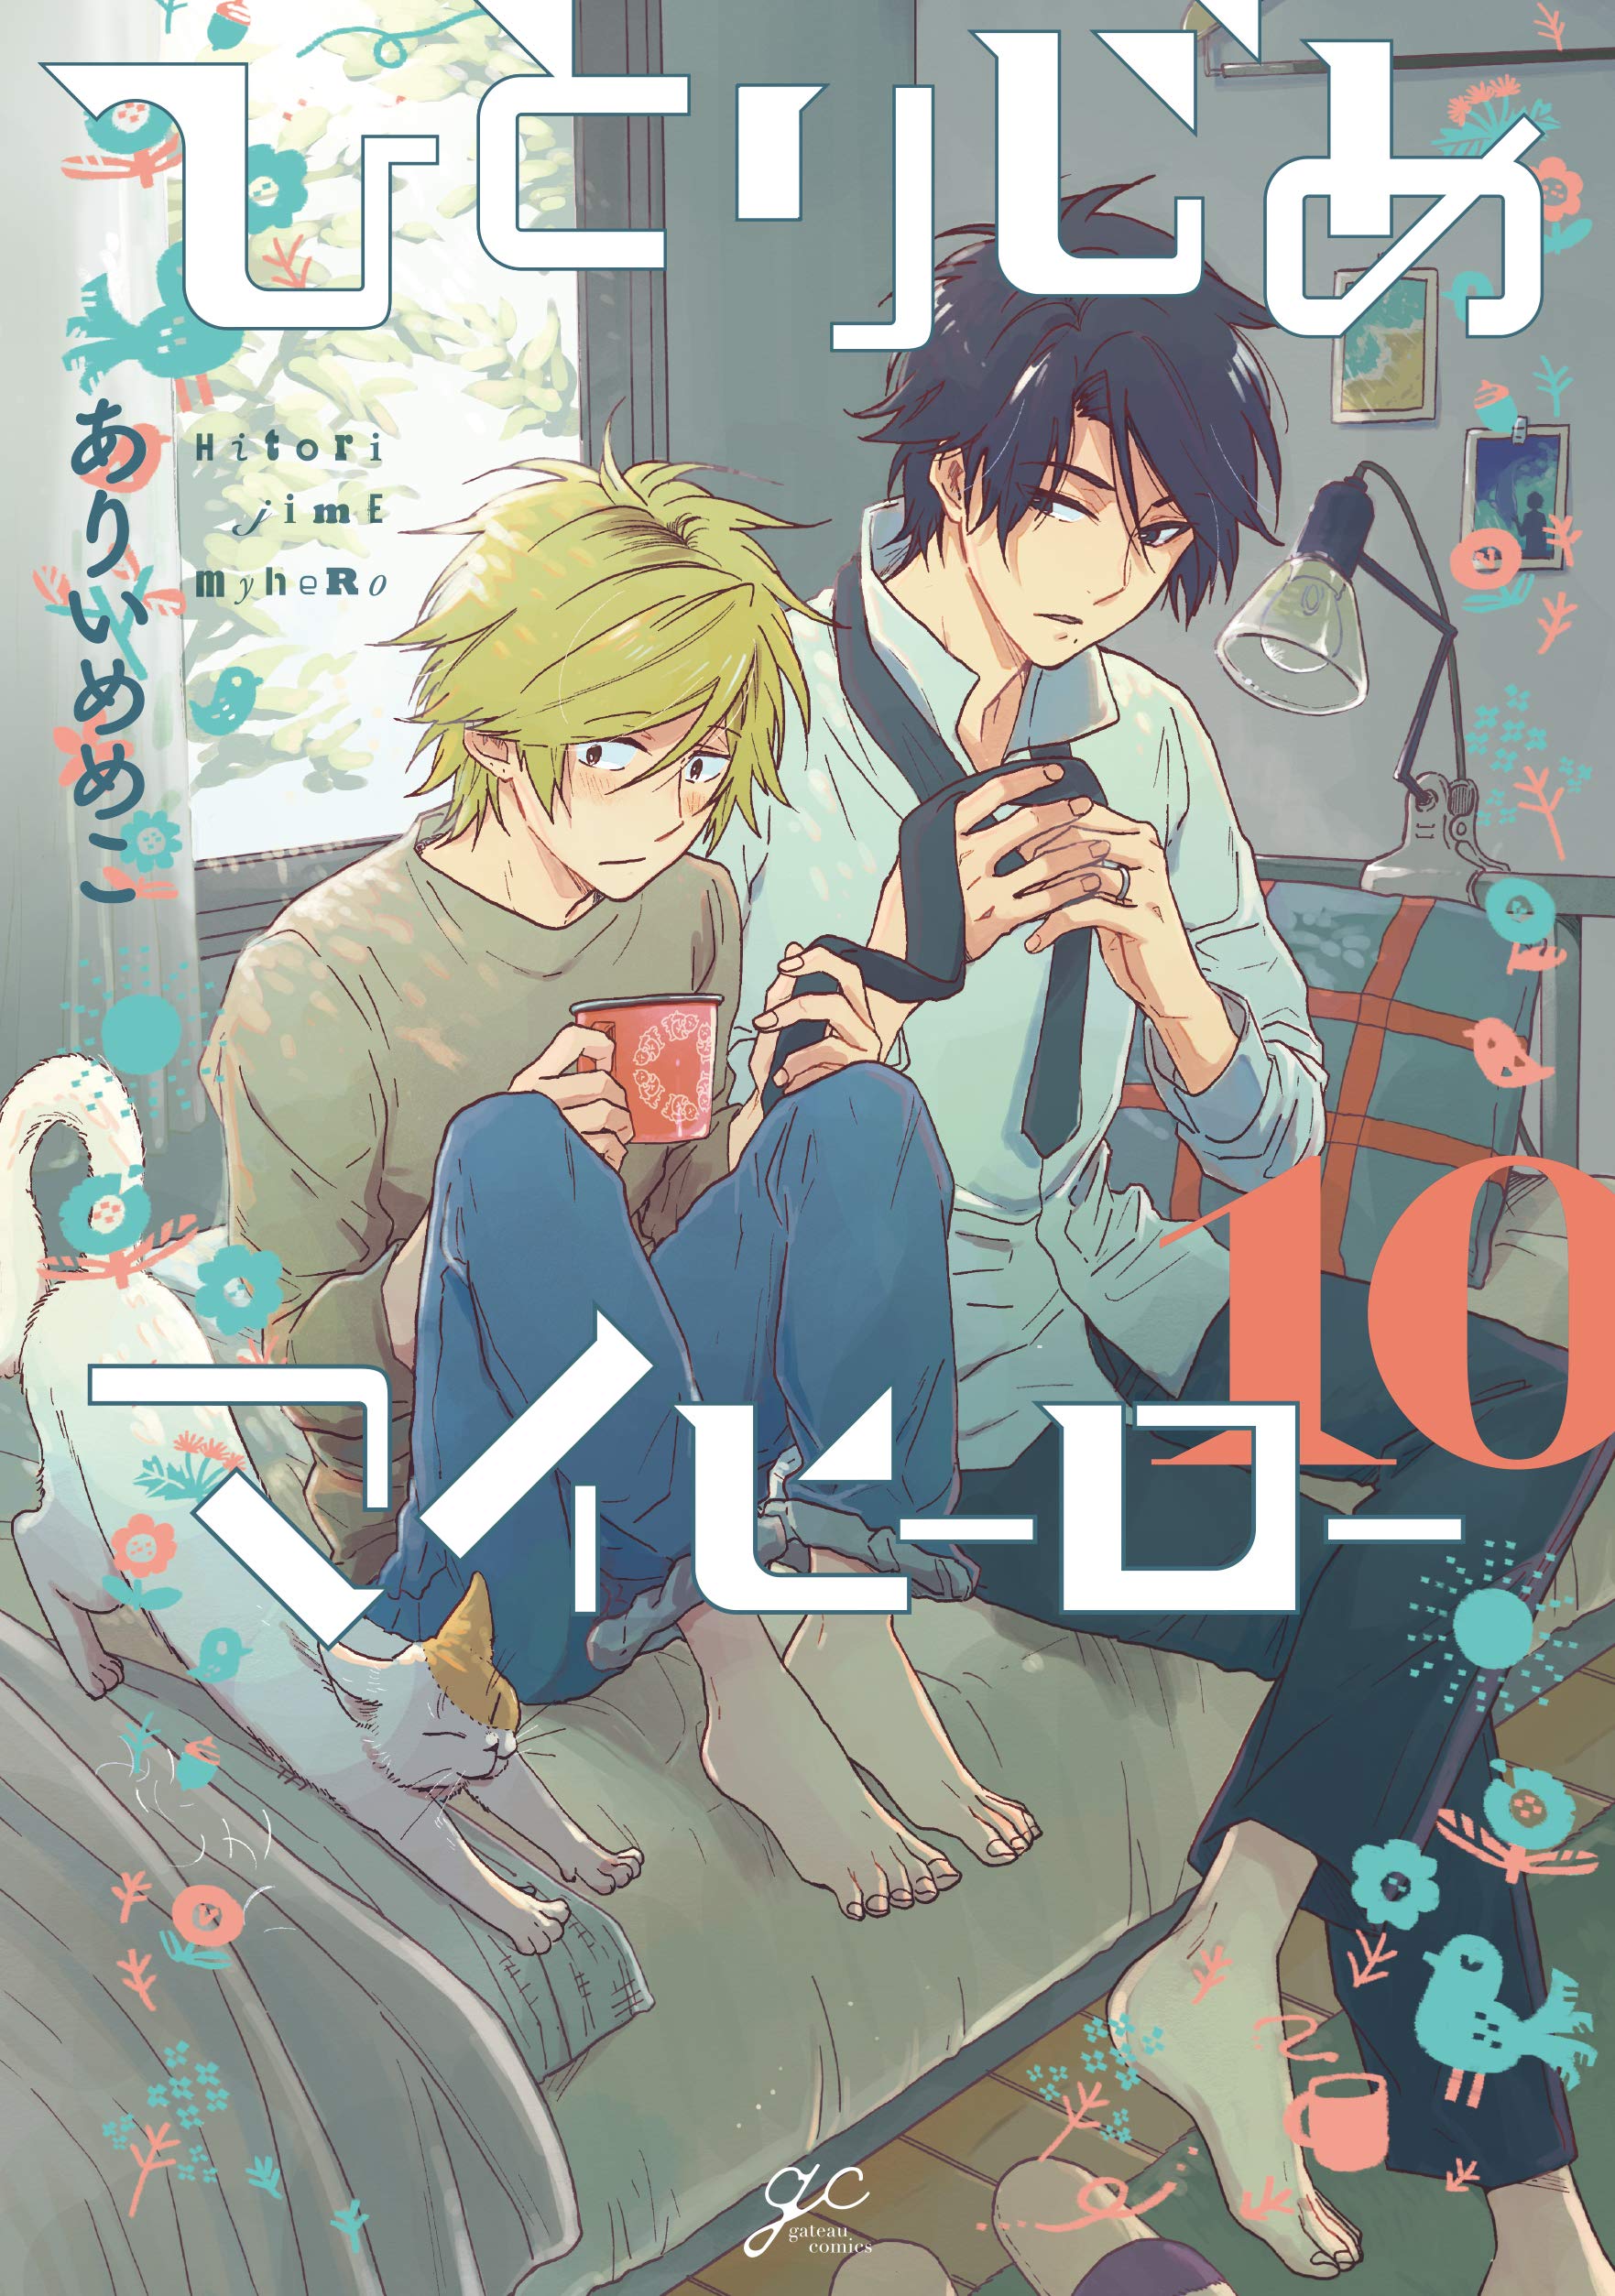 Boys Love (Yaoi) Comics - Hitorijime My Hero (ひとりじめマイヒーロー 10巻 (gateauコミックス)) / Arii Memeko